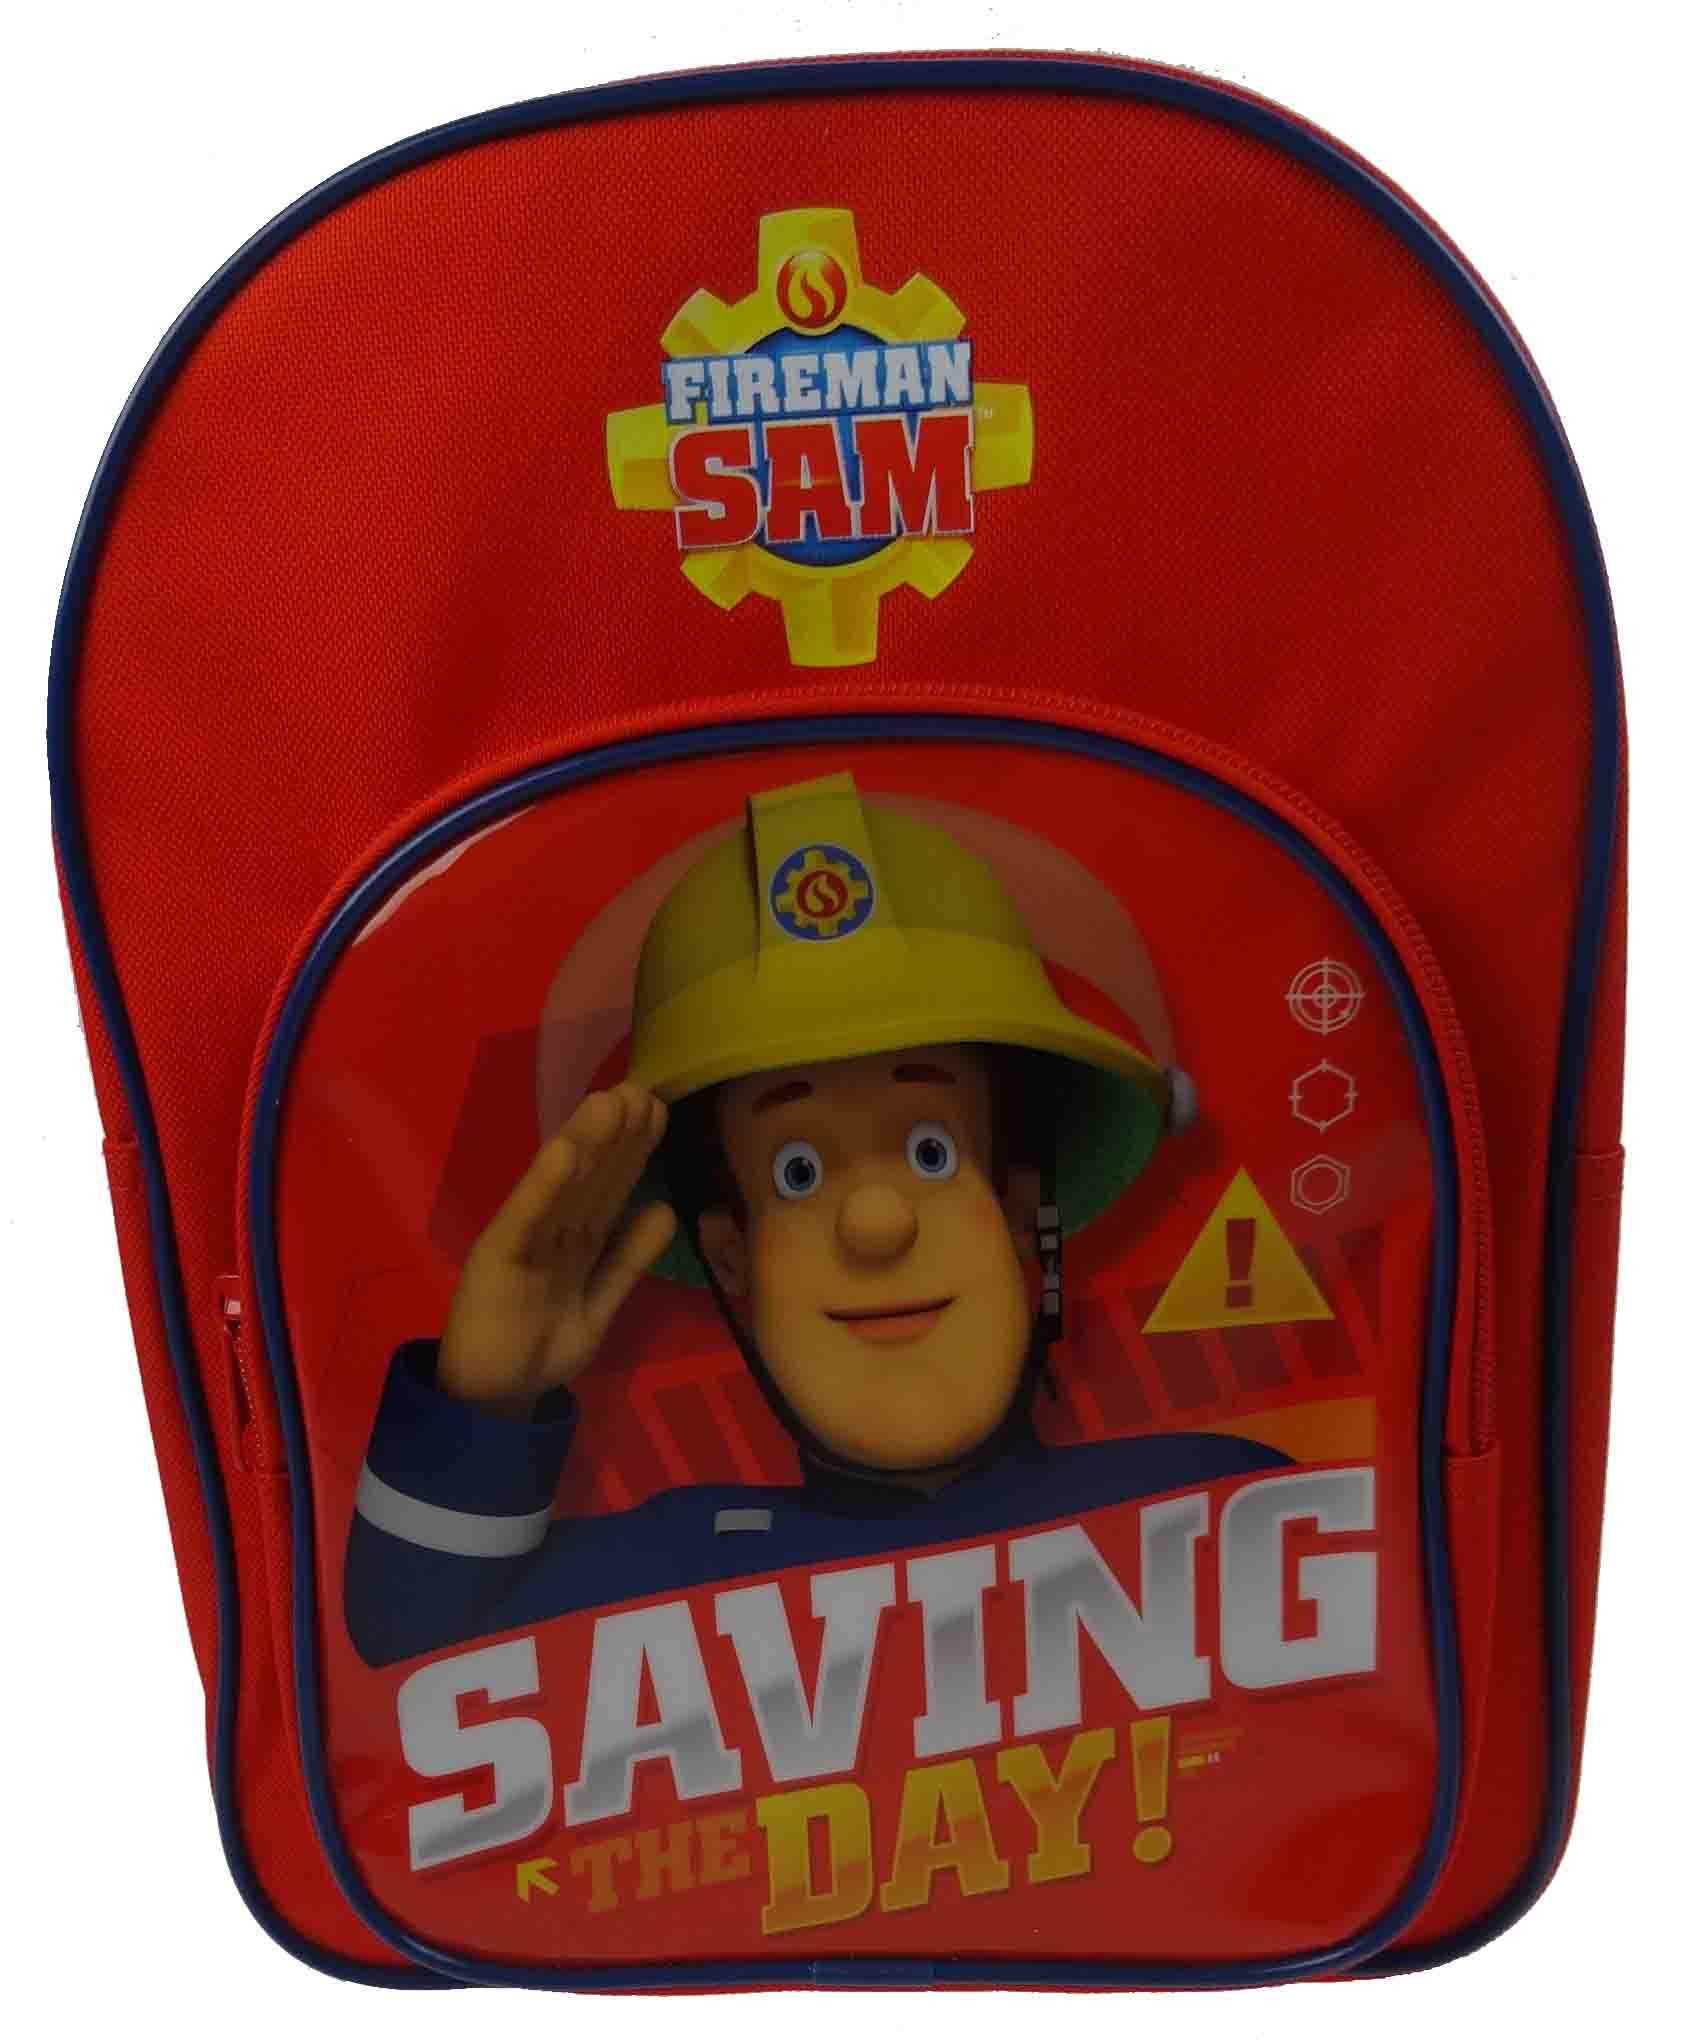 Fireman Sam Saving The Day School Bag Rucksack Backpack